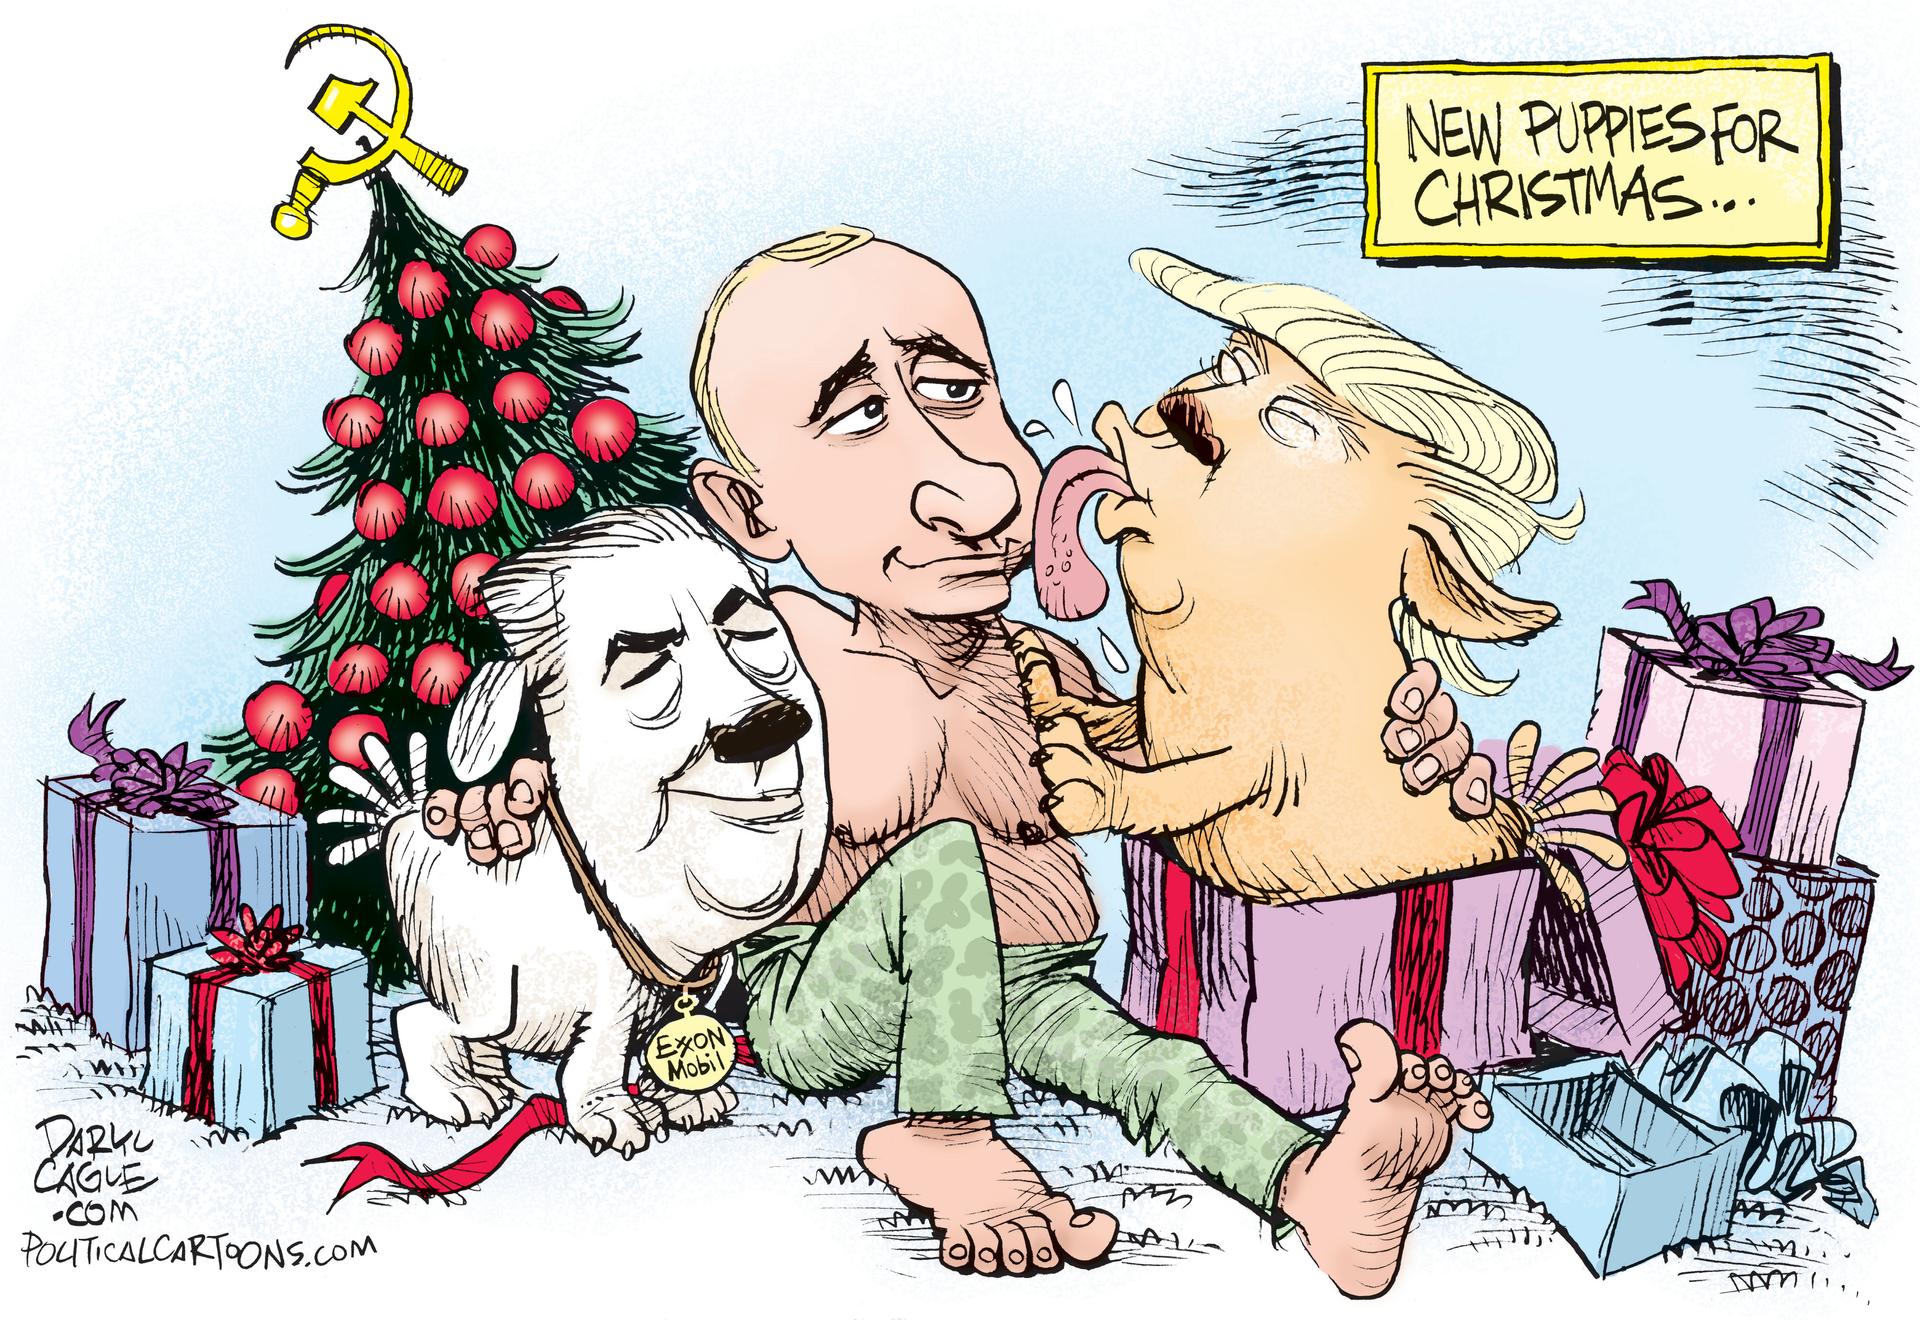 Puppies for Putin.